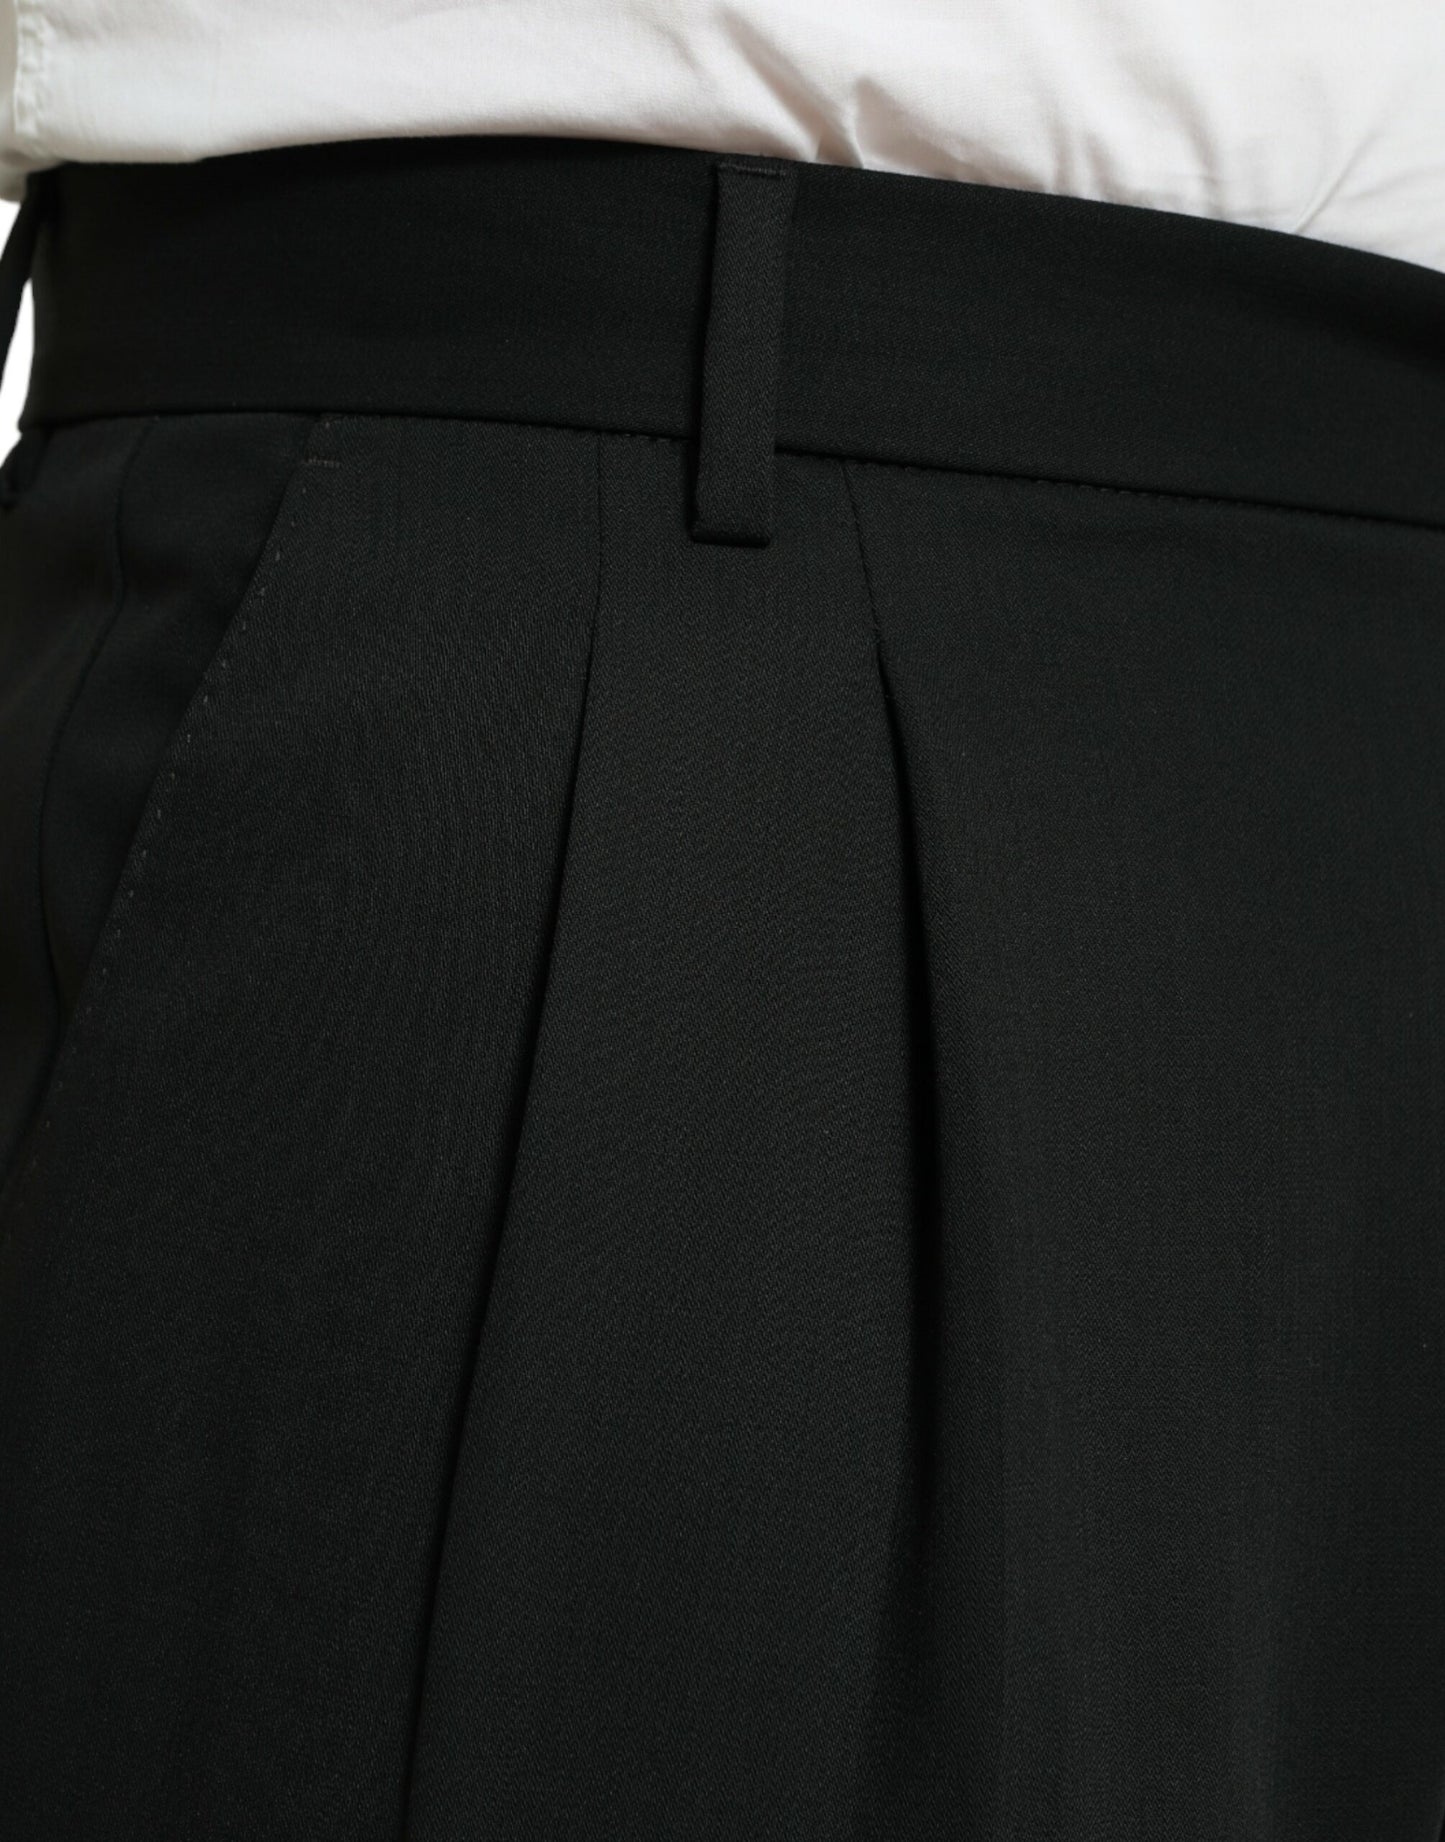 Dolce & Gabbana Elegant Black Wool Dress Pants